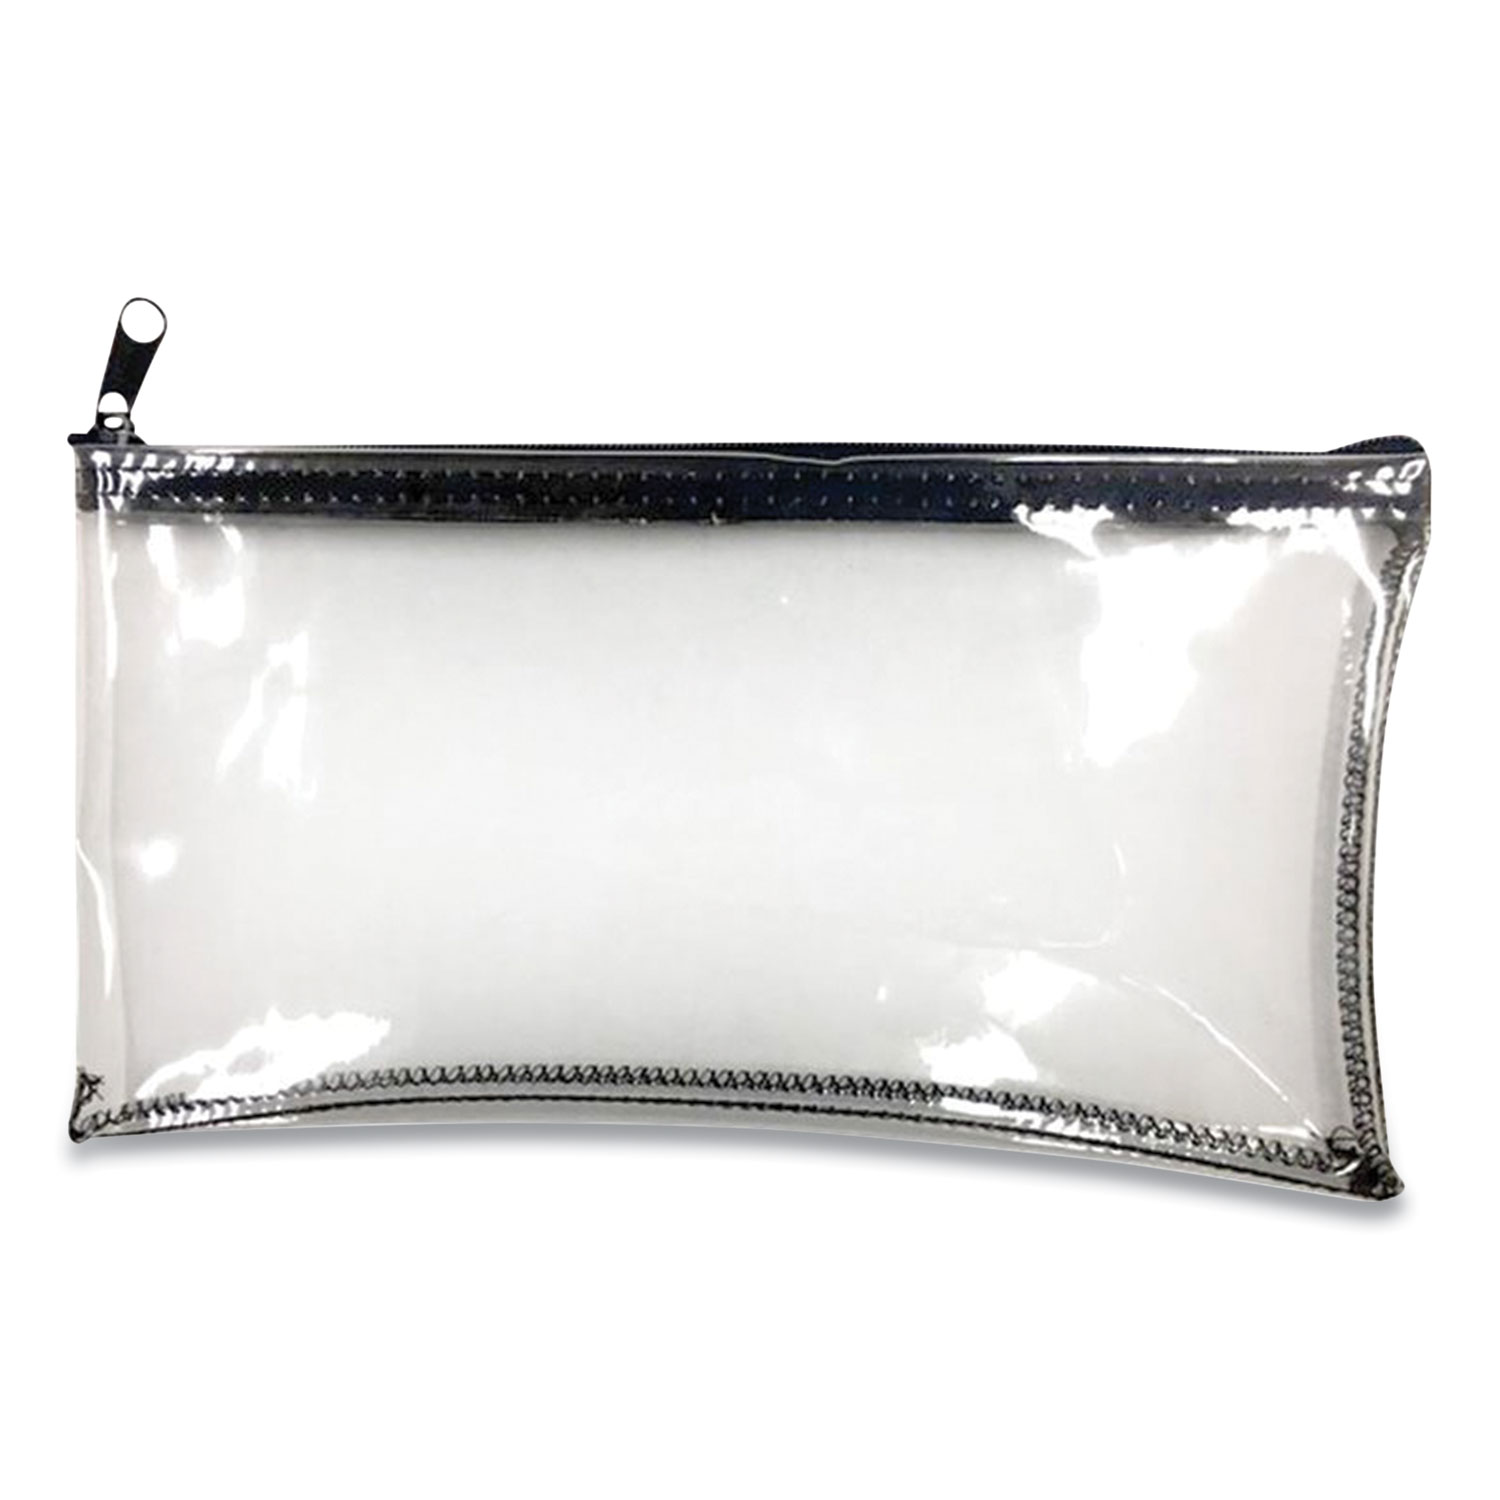 CONTROLTEK® Multipurpose Zipper Bags, 11 x 6, Clear